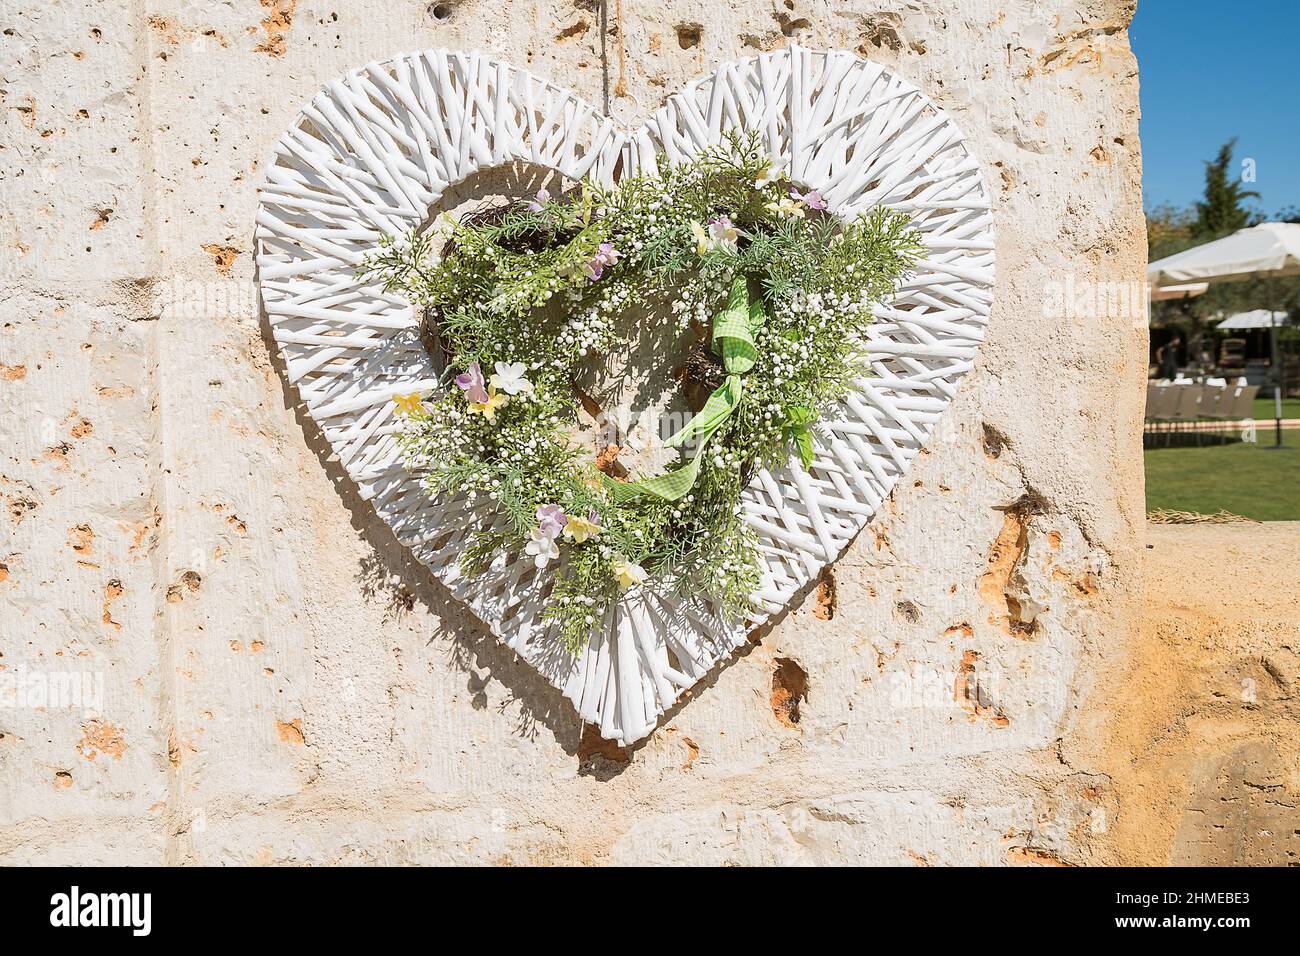 Vintage Handmade Wooden Wicker Heart Shaped Decorative 